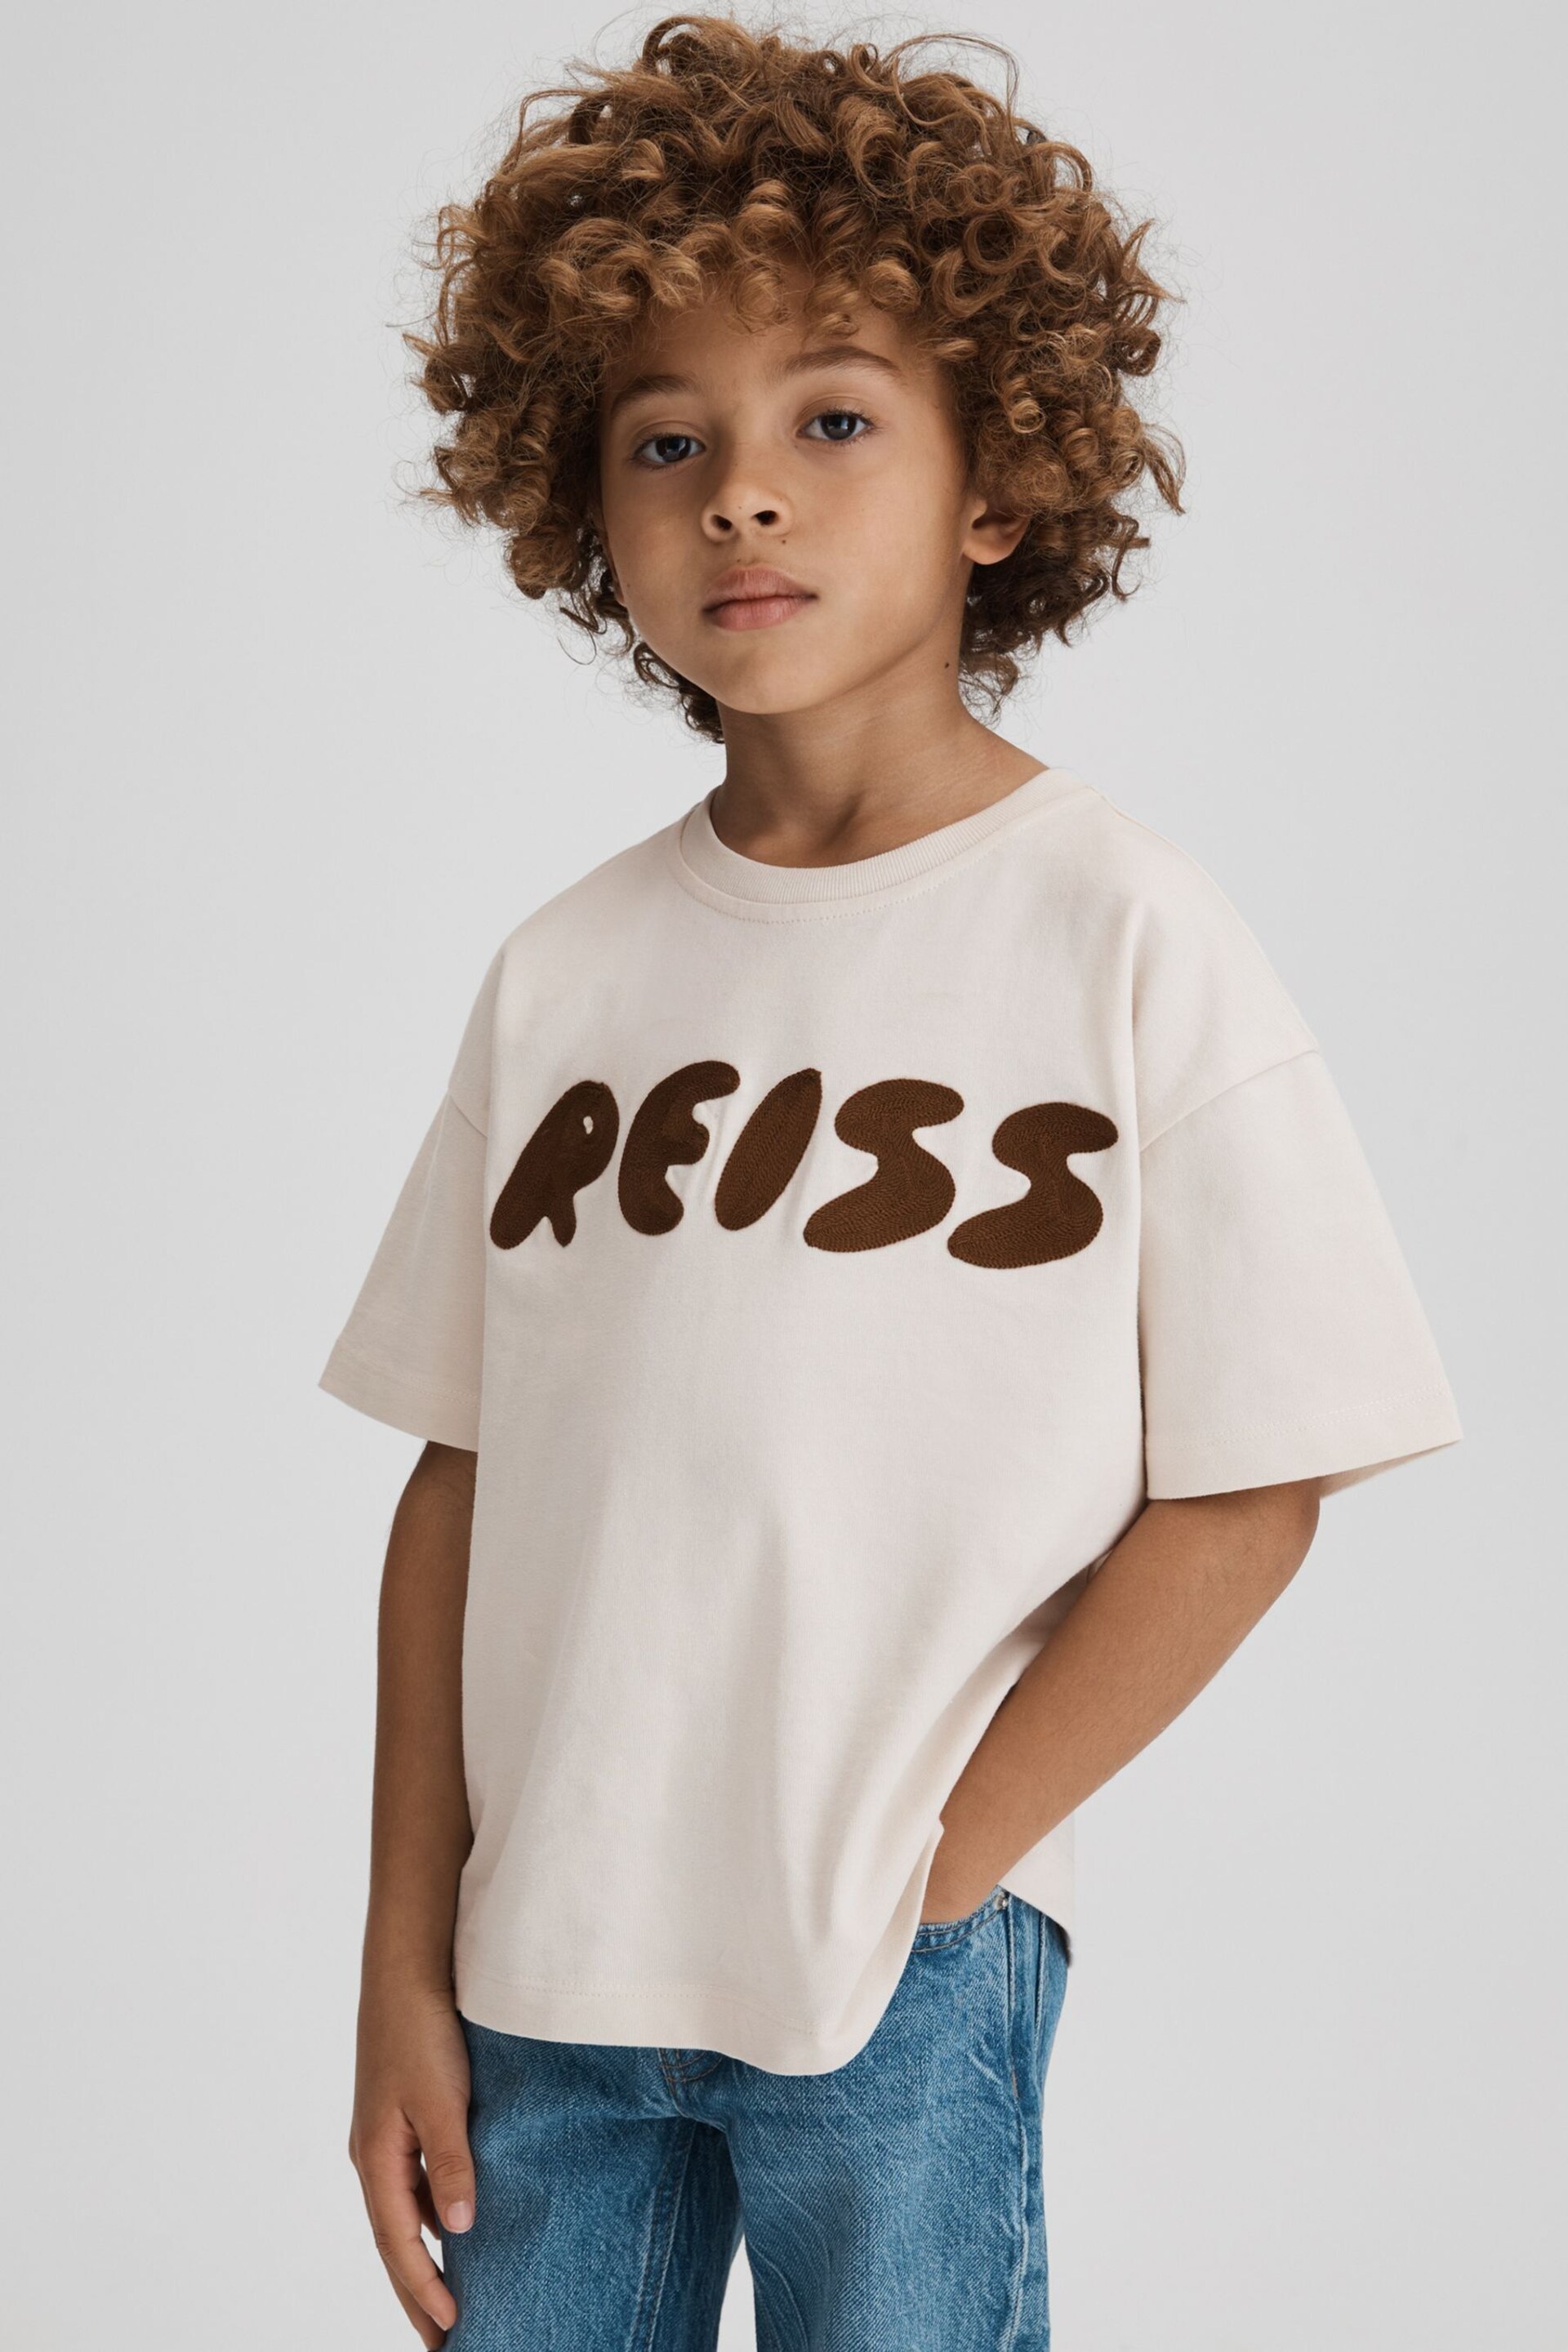 Reiss Ecru Sands Senior Cotton Crew Neck Motif T-Shirt - Image 3 of 6